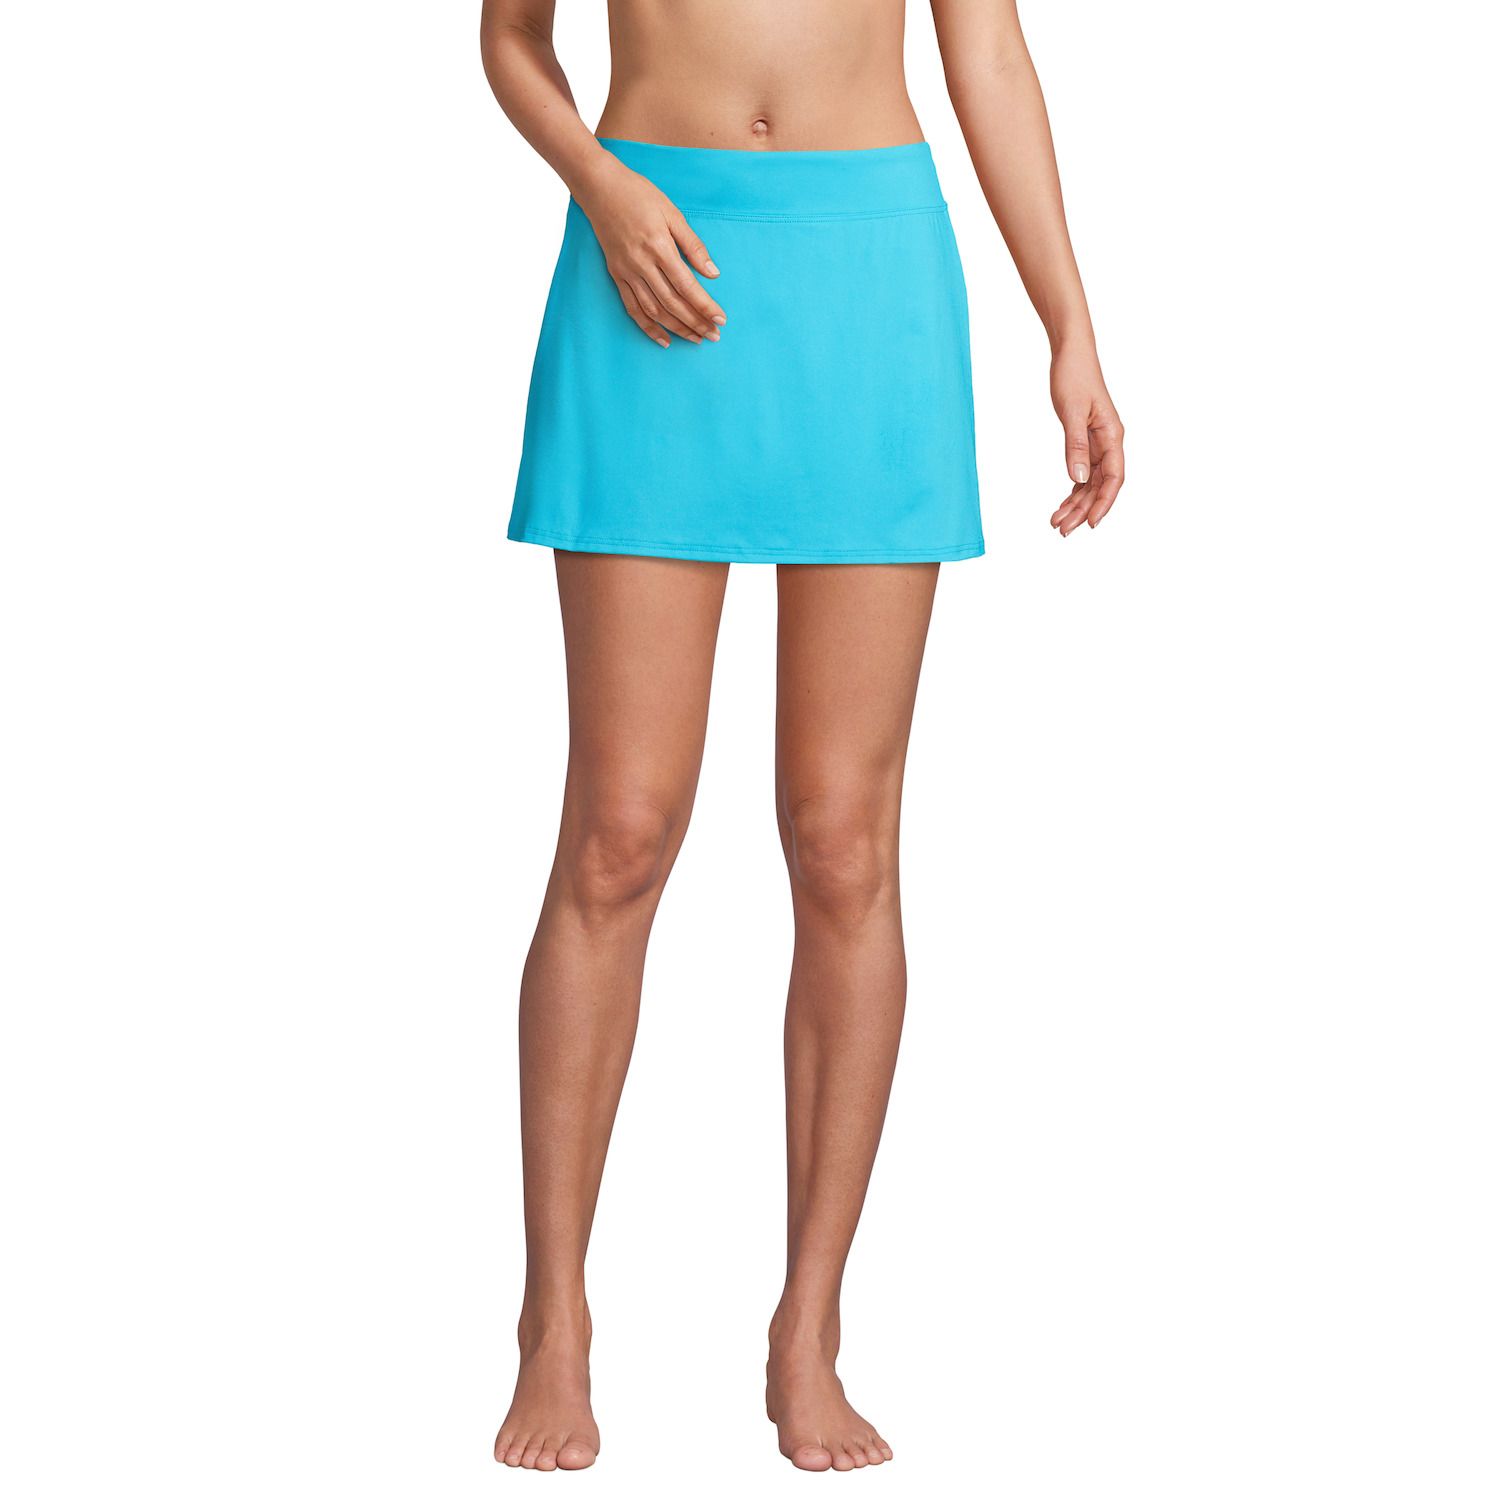 Image for Lands' End Petite Thigh Minimizer Swim Skirt at Kohl's.